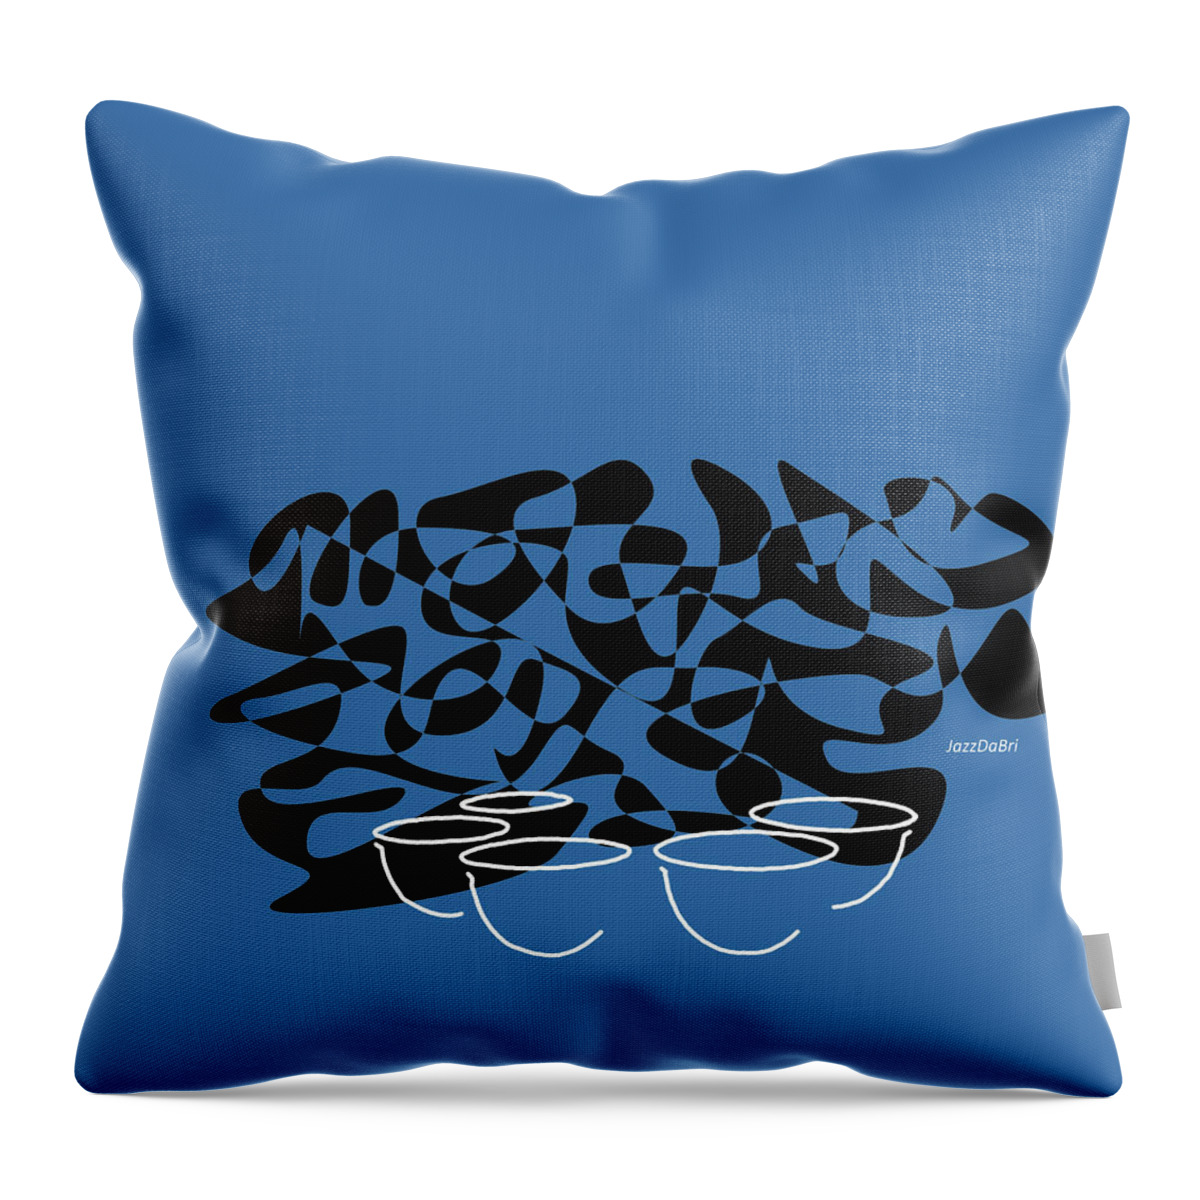 Jazzdabri Throw Pillow featuring the digital art Timpani in Blue by David Bridburg